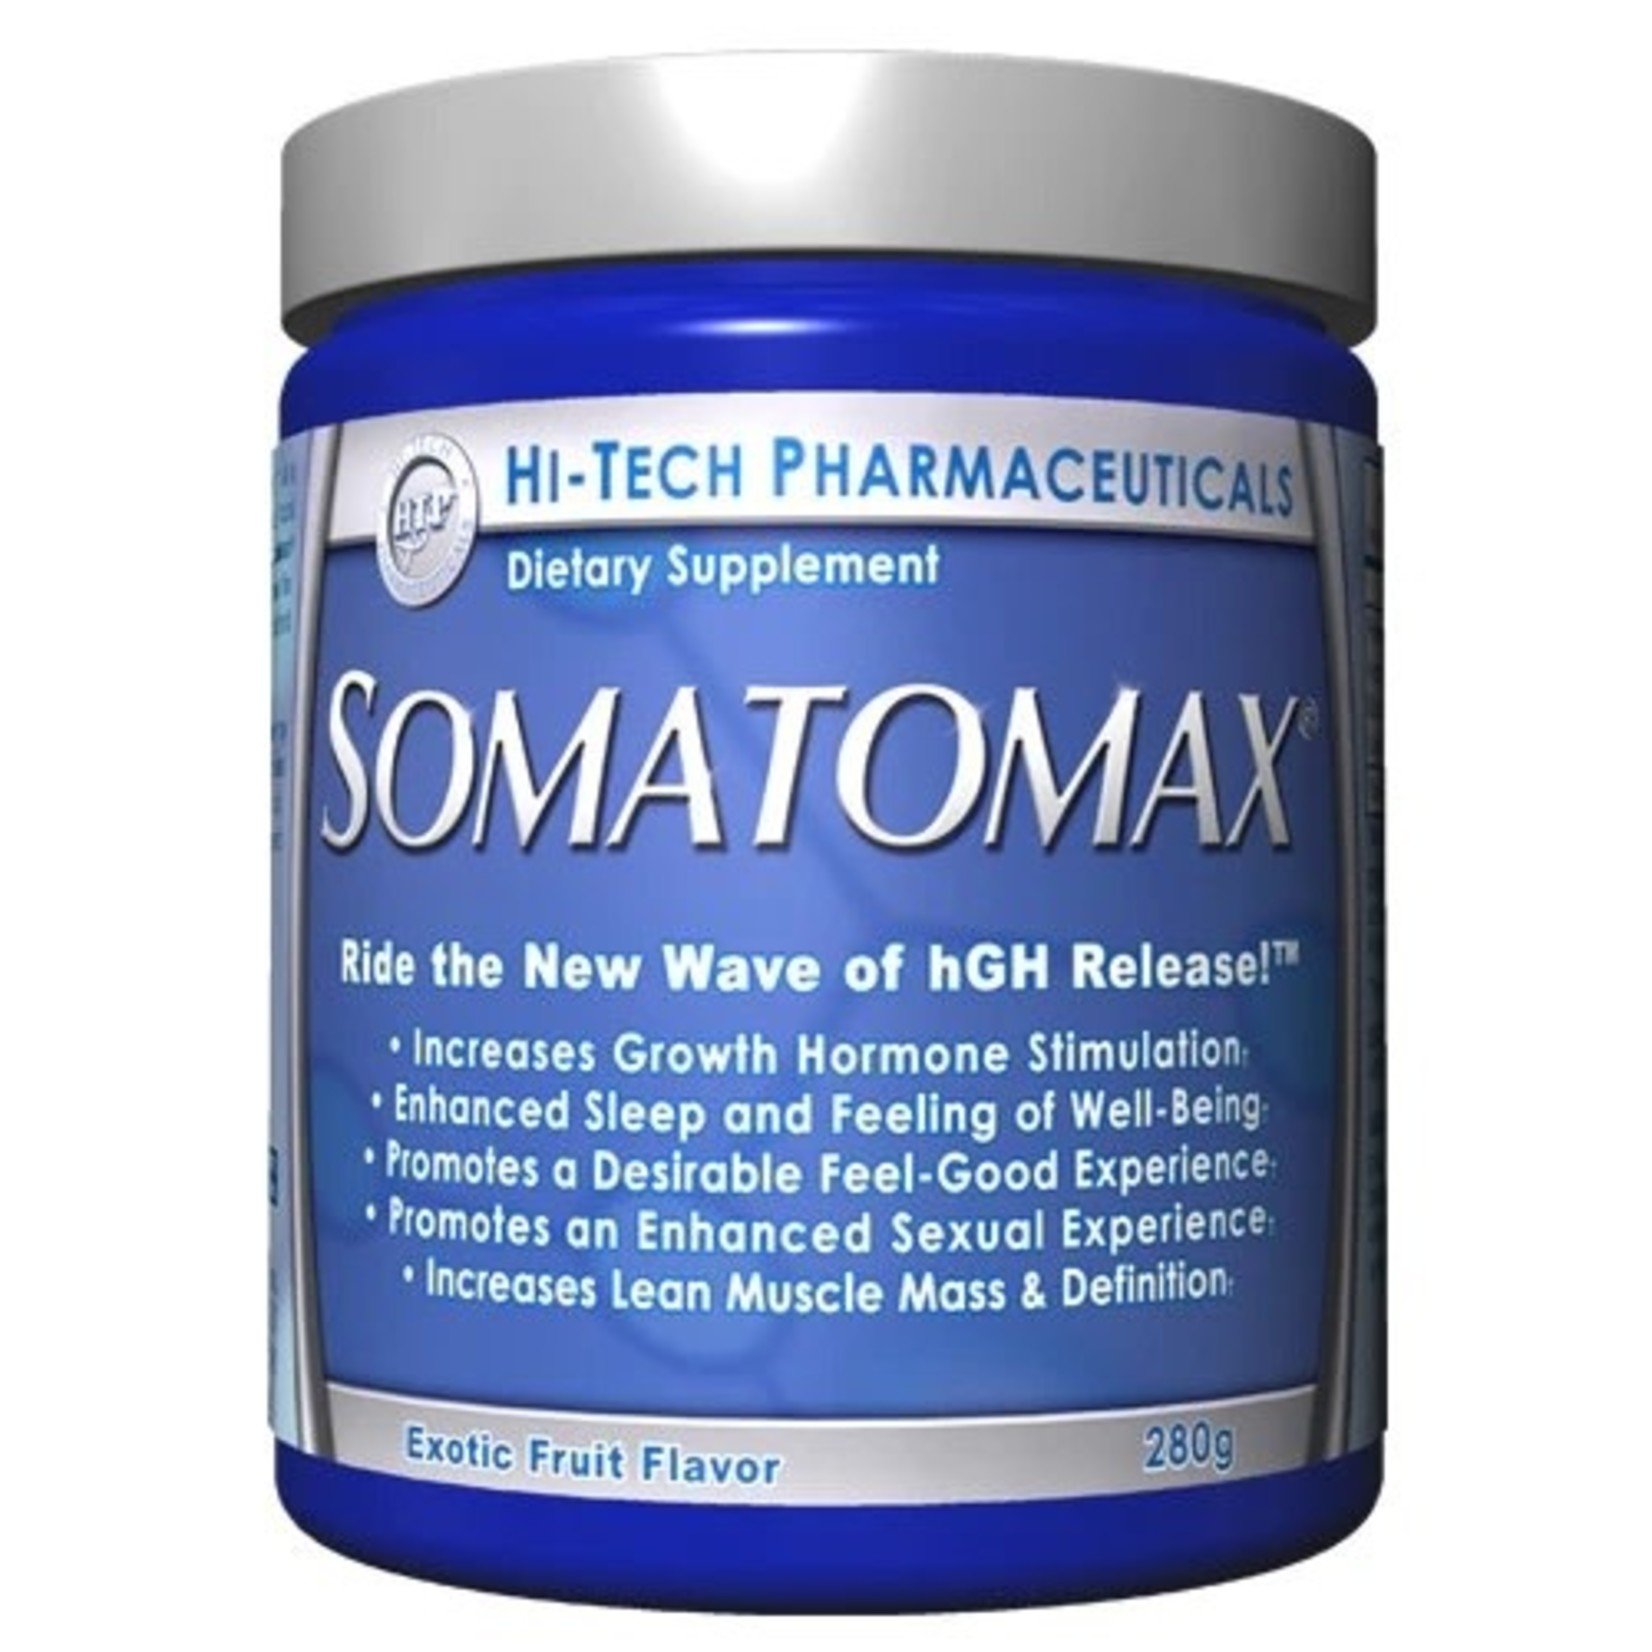 Hi-Tech Pharmaceuticals Hi-Tech Pharmaceuticals Somatomax